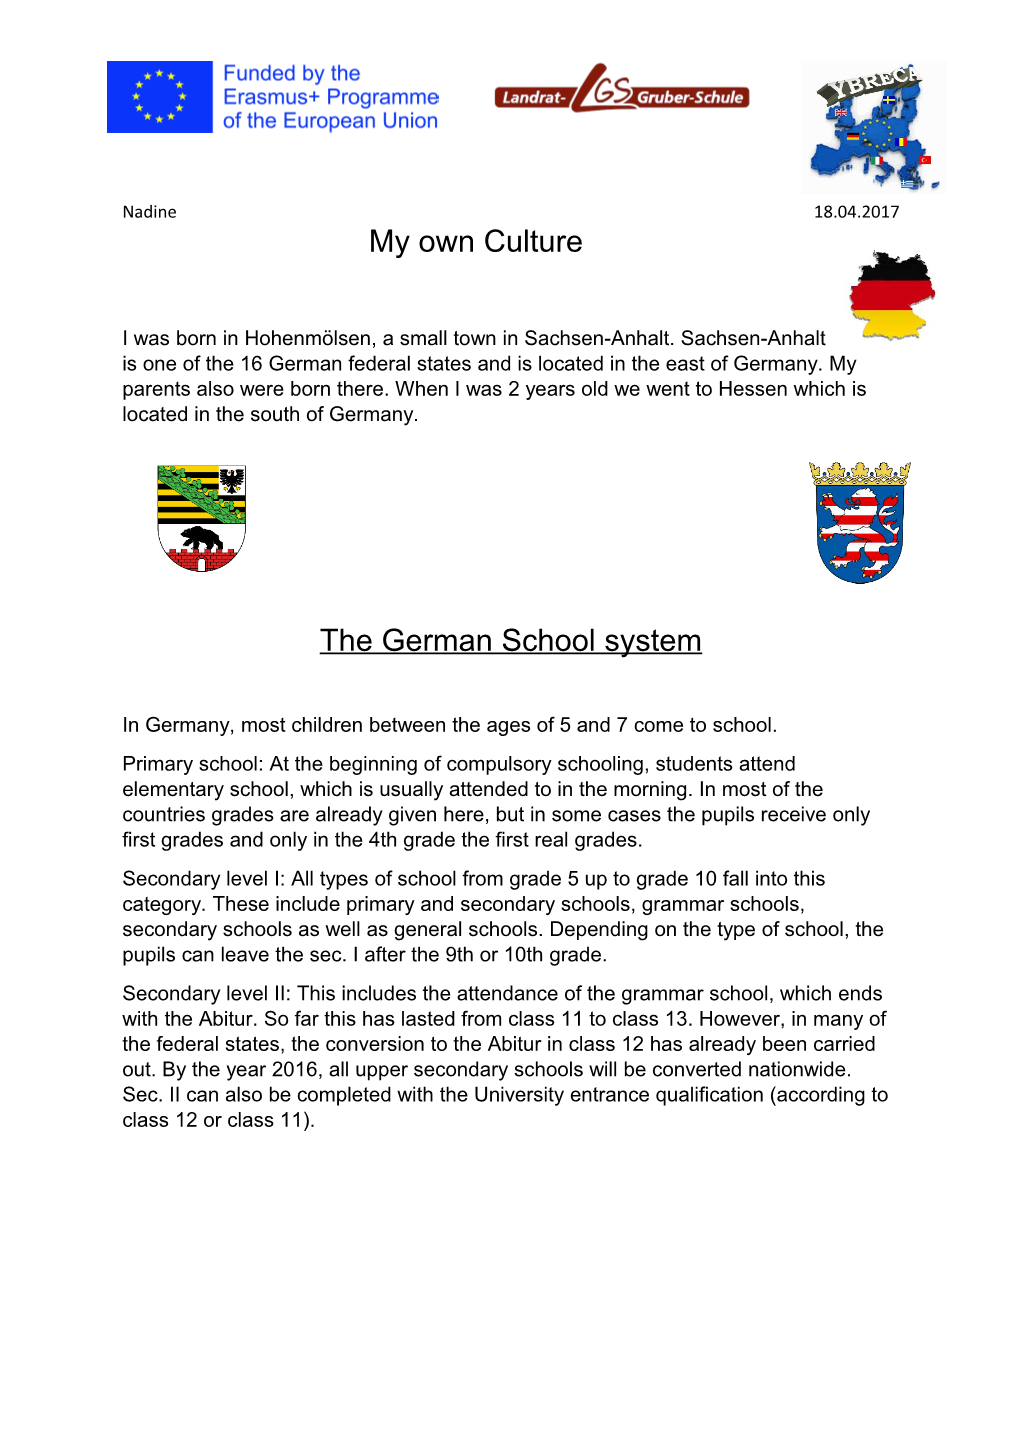 The German School System